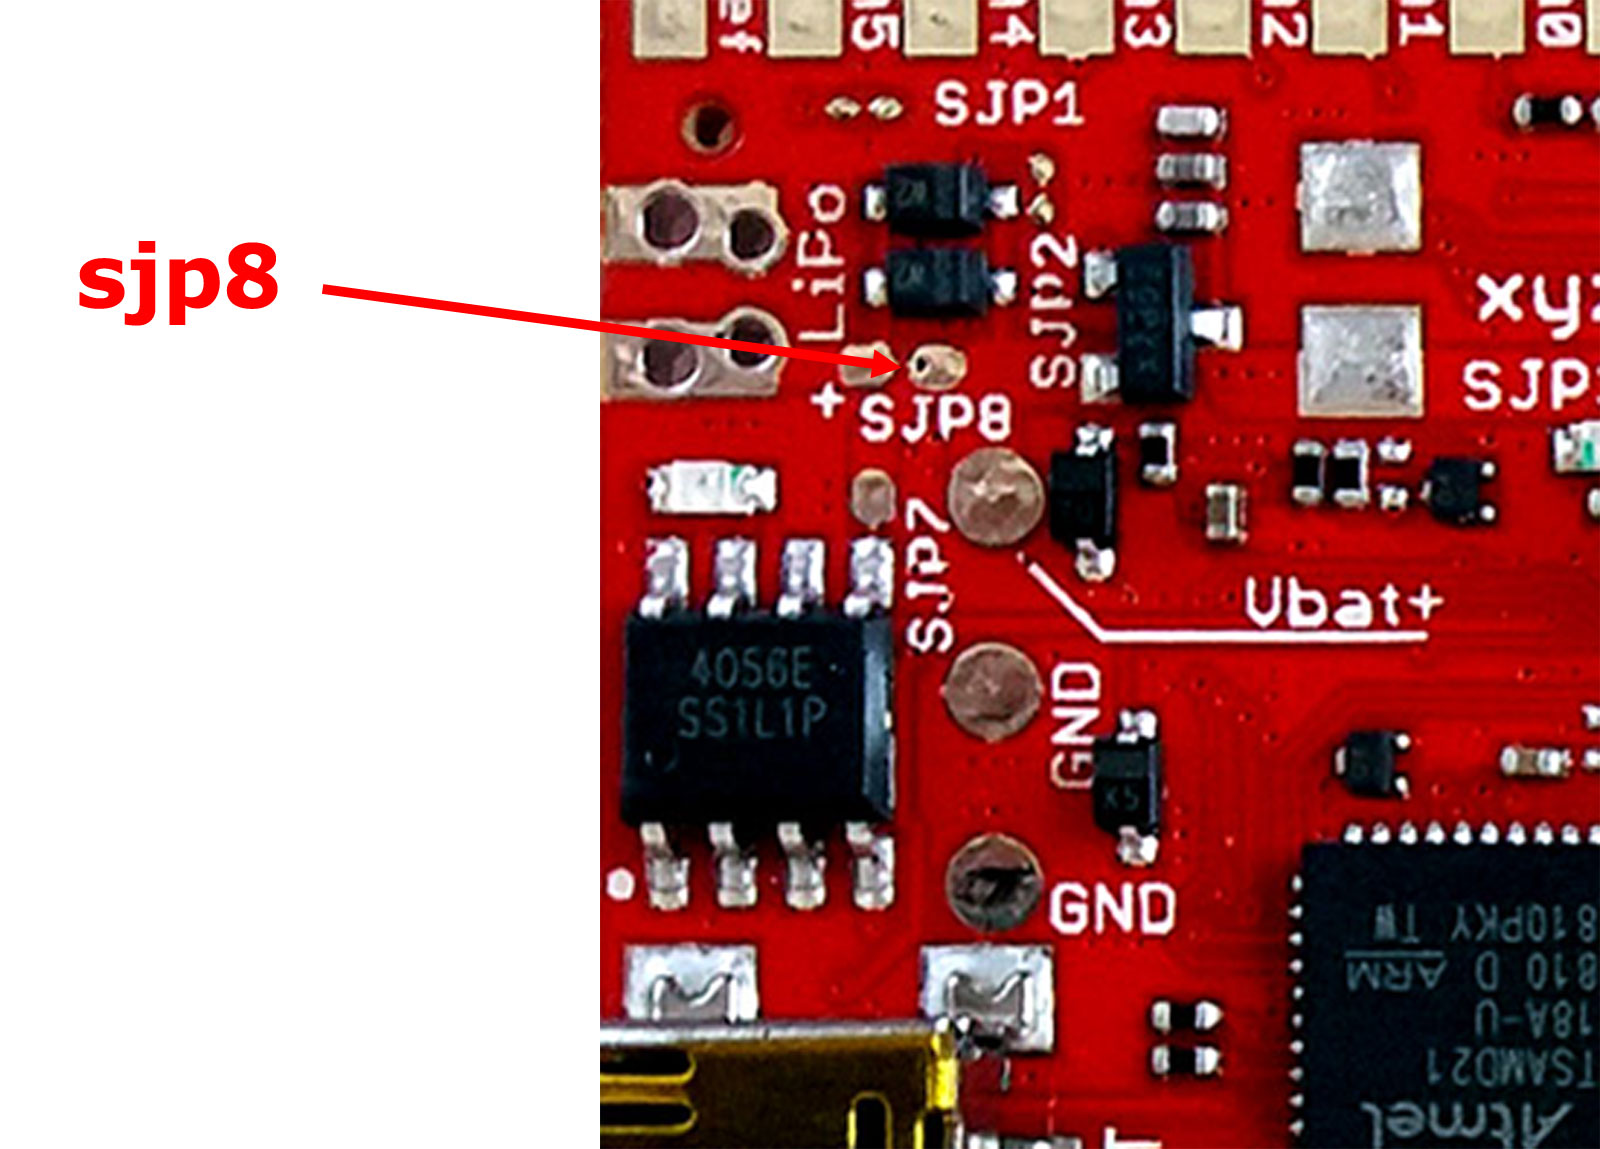 xyz-mIoT shield soldering jumper SJP8 detail